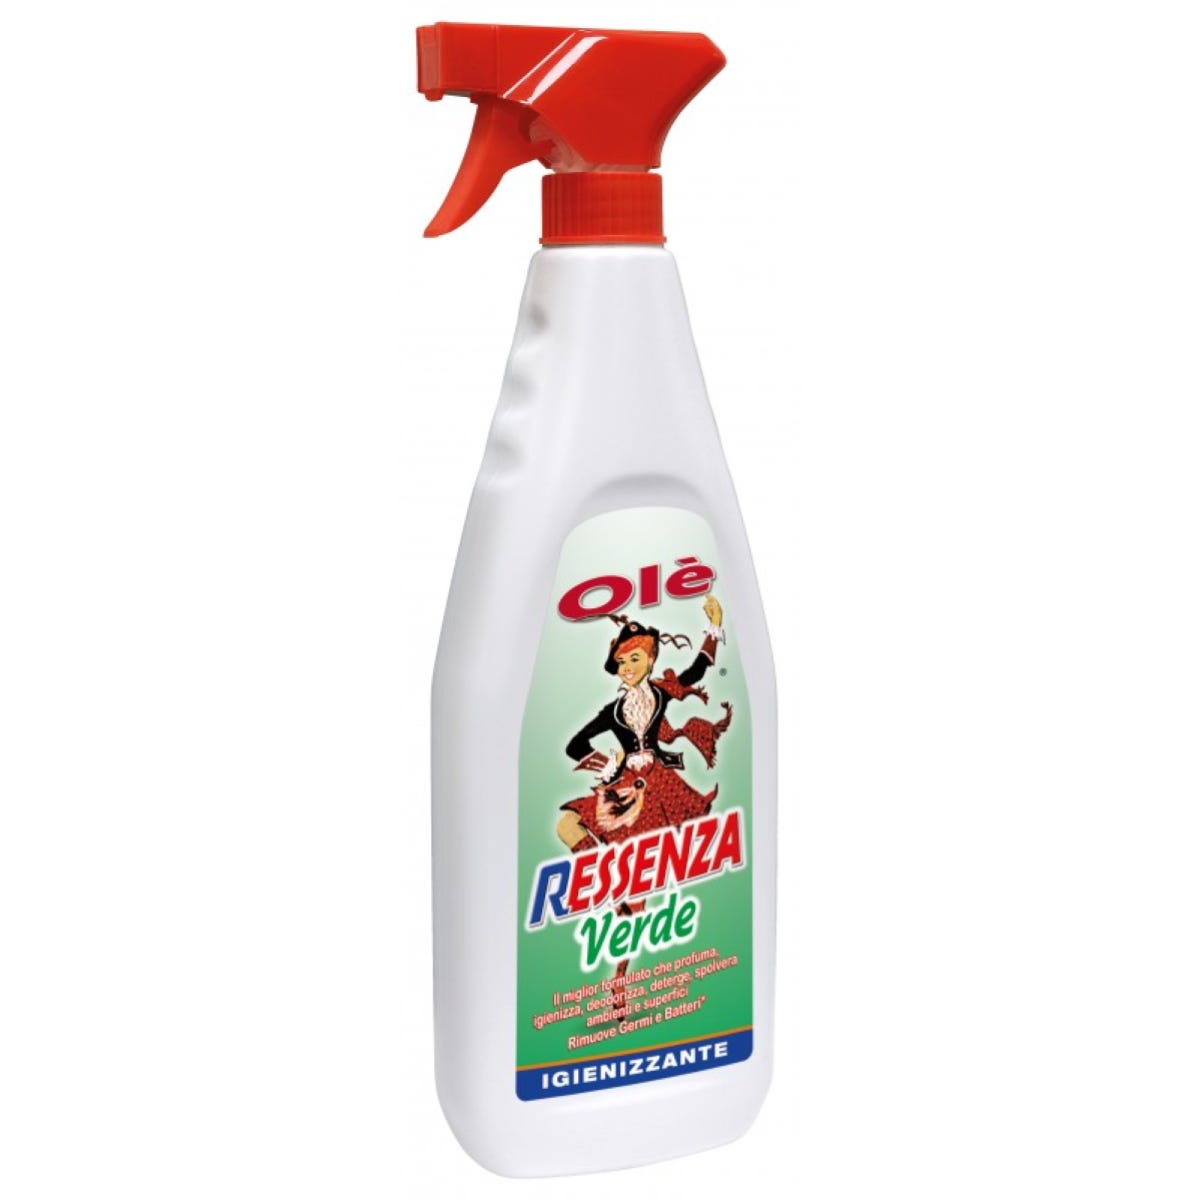 OLÈ RESSENZA profumata ml.750 12 PEZZI igienizzante detergente spray Verde